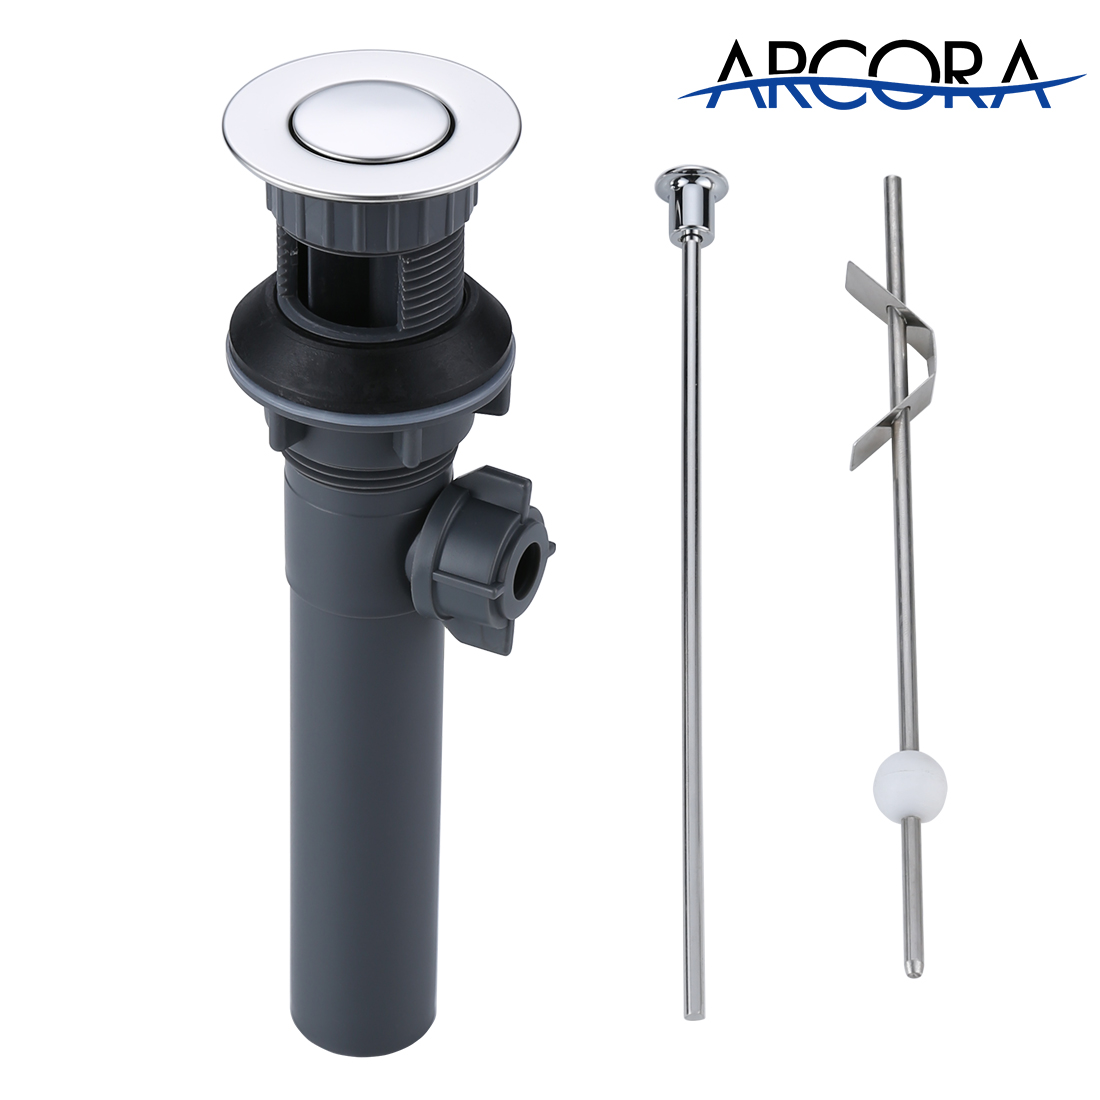 Arcora Pop Up Drain Stopper Replacement Parts Arcorafaucet